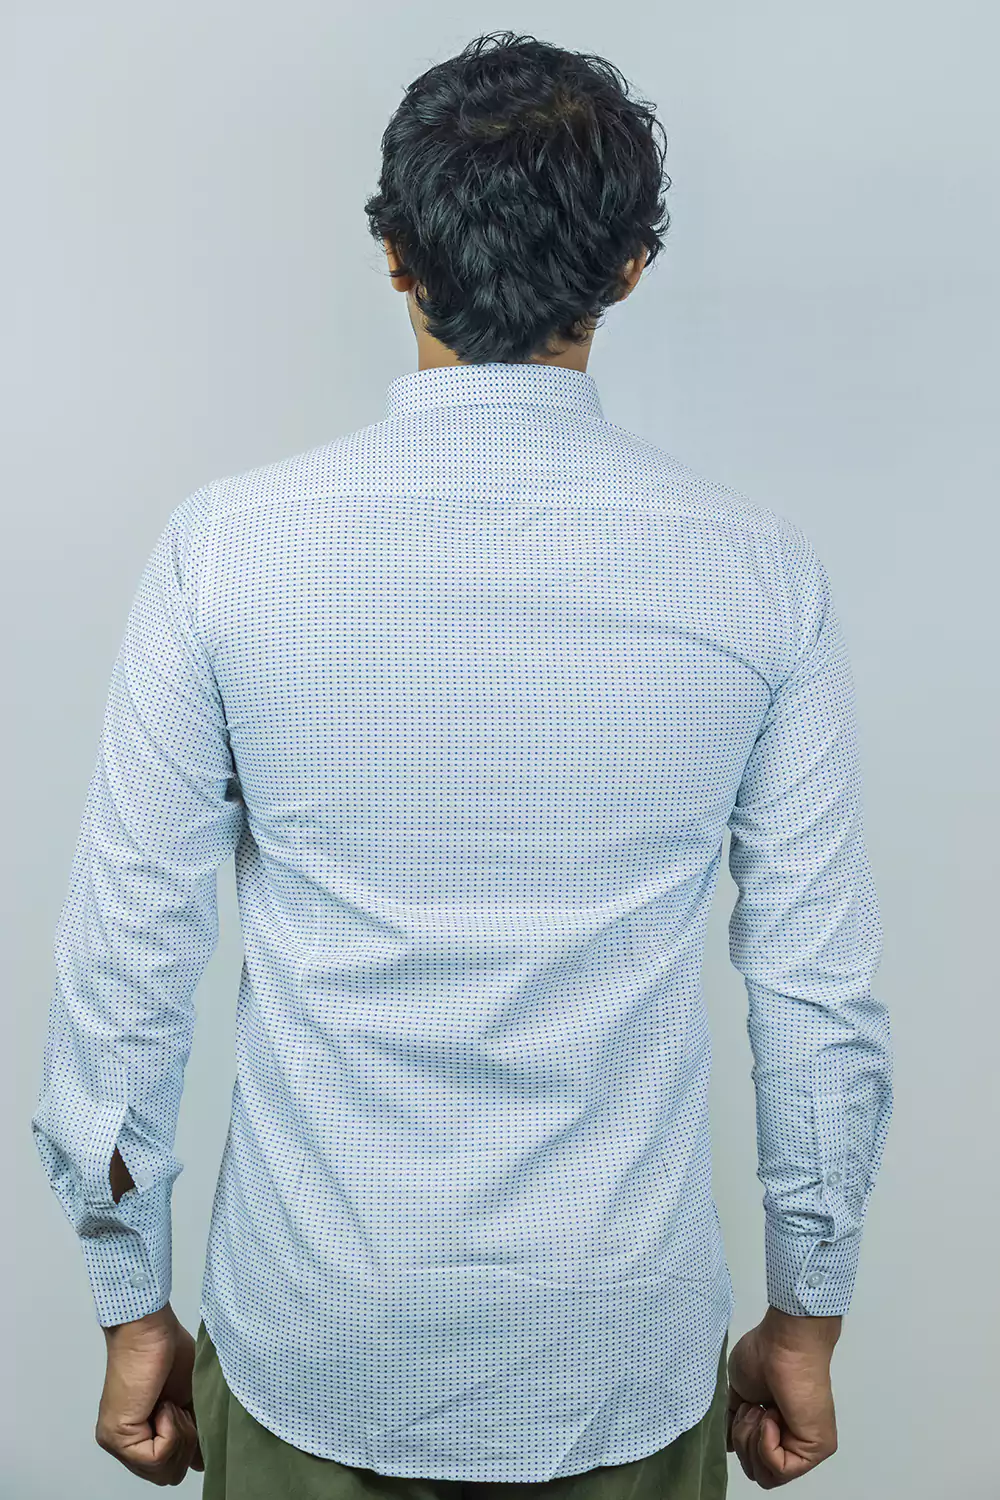 Simple Blue & White Printed Shirt